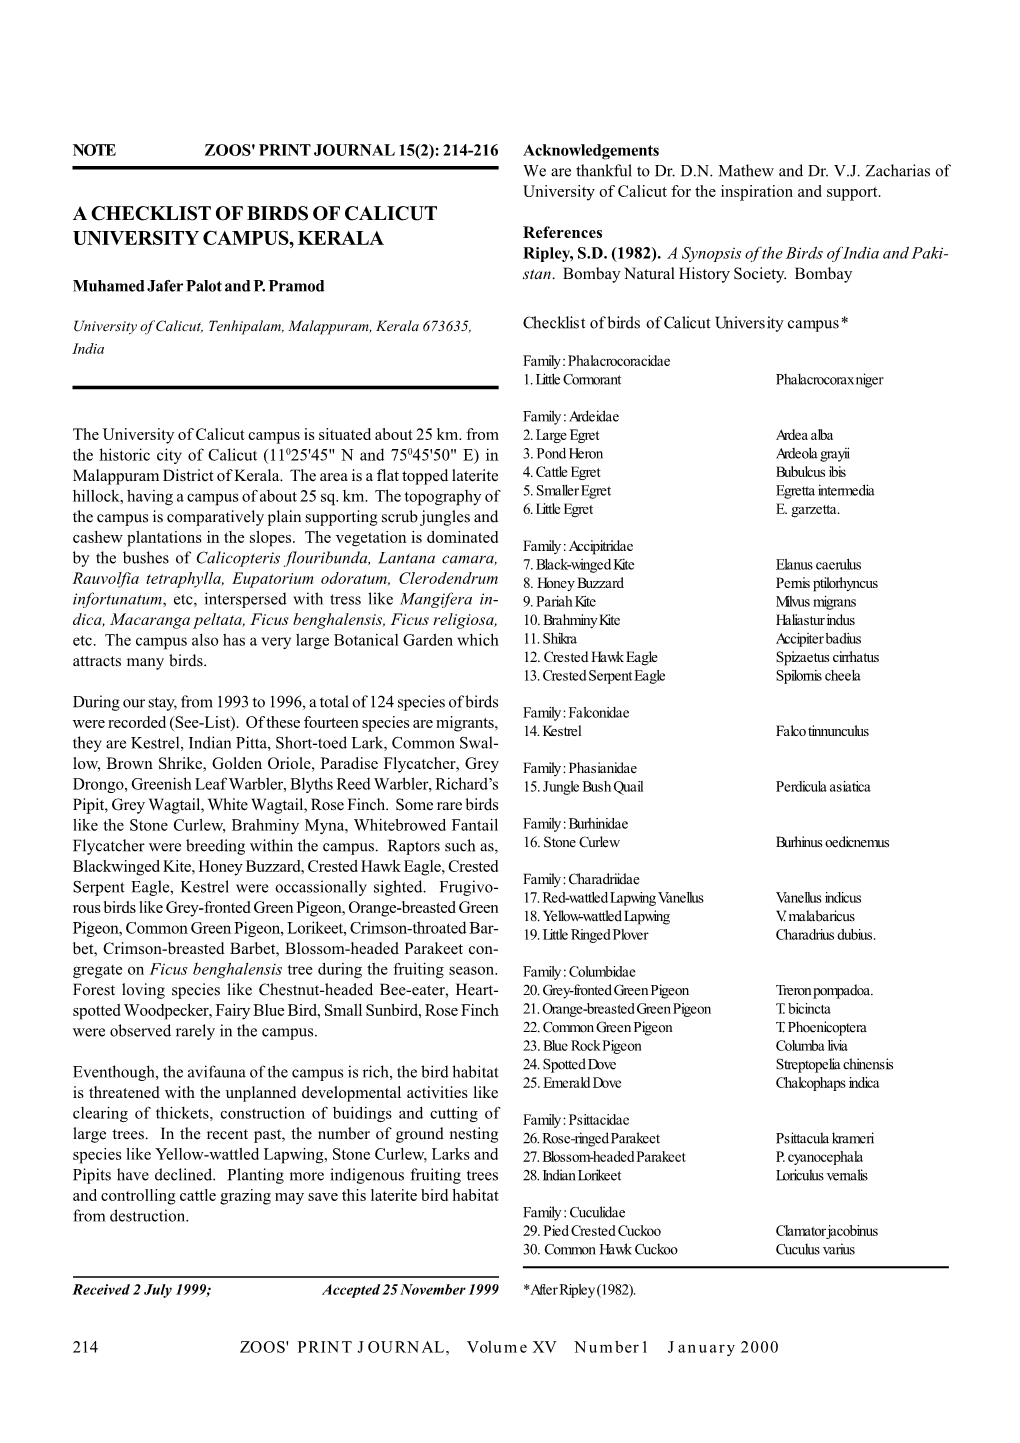 A CHECKLIST of BIRDS of CALICUT UNIVERSITY CAMPUS, KERALA References Ripley, S.D